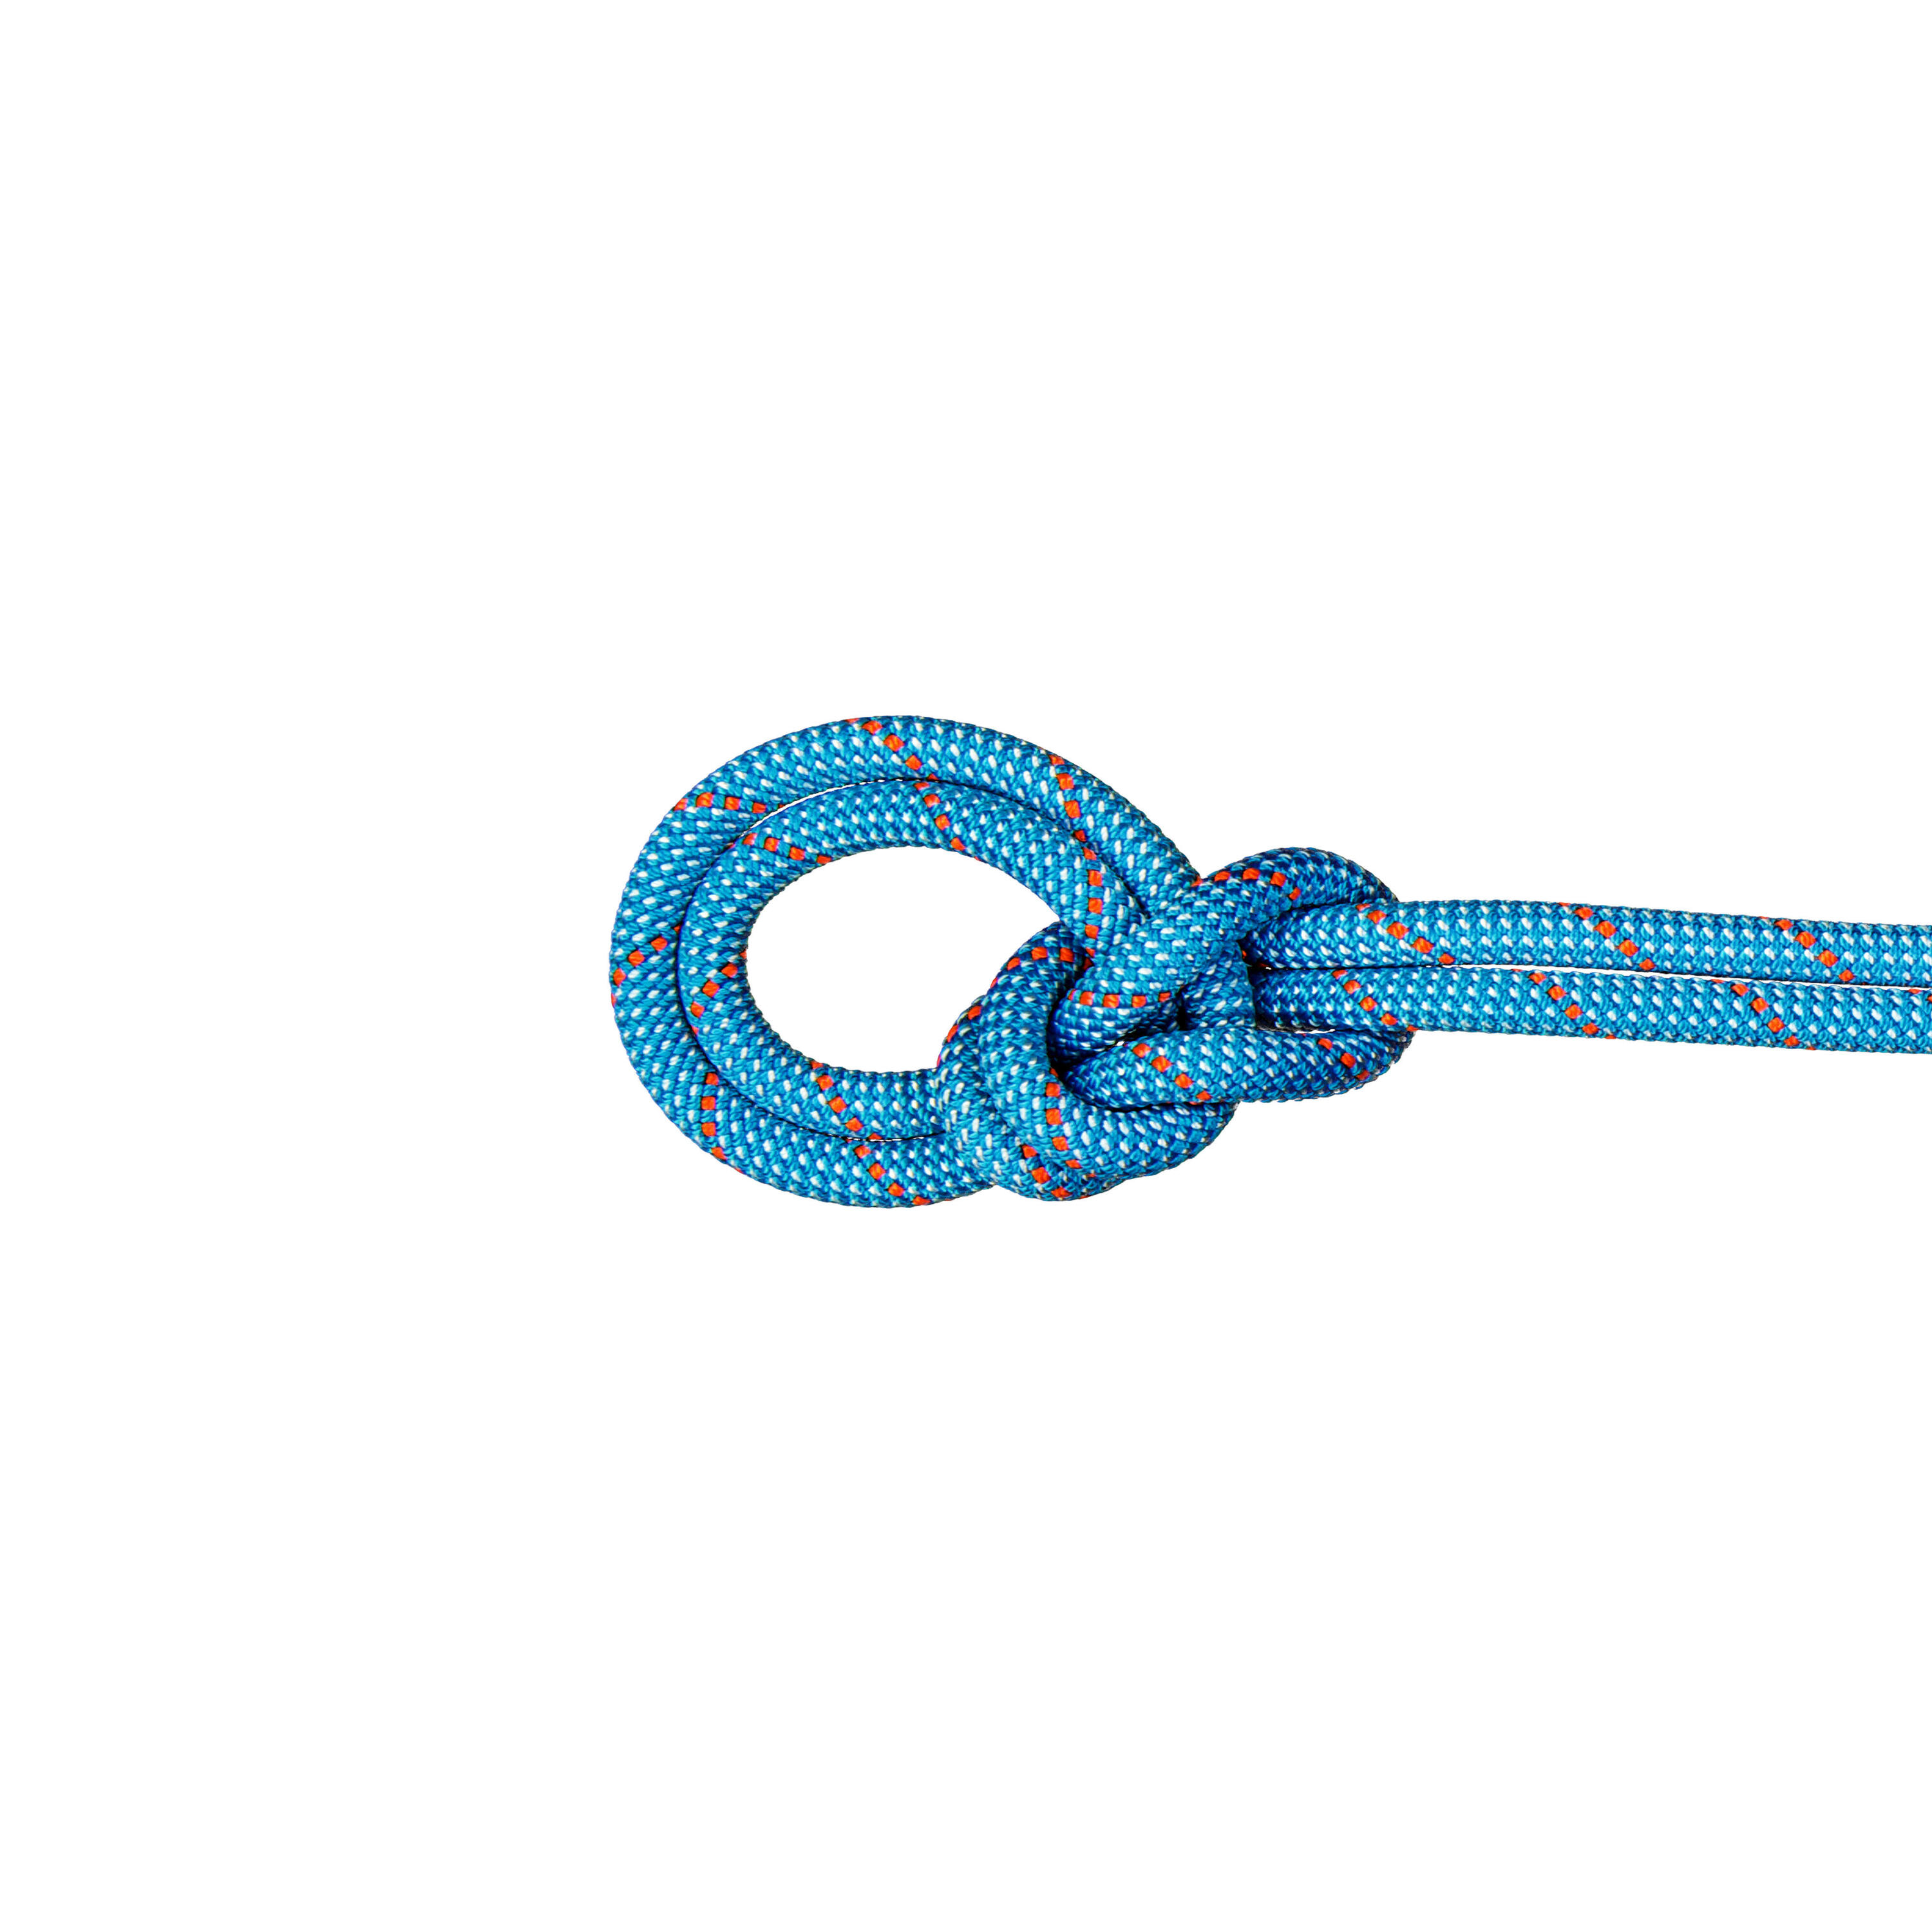 MAMMUT Crag Classic Single Rope 9.8 mm x 70m - Blue